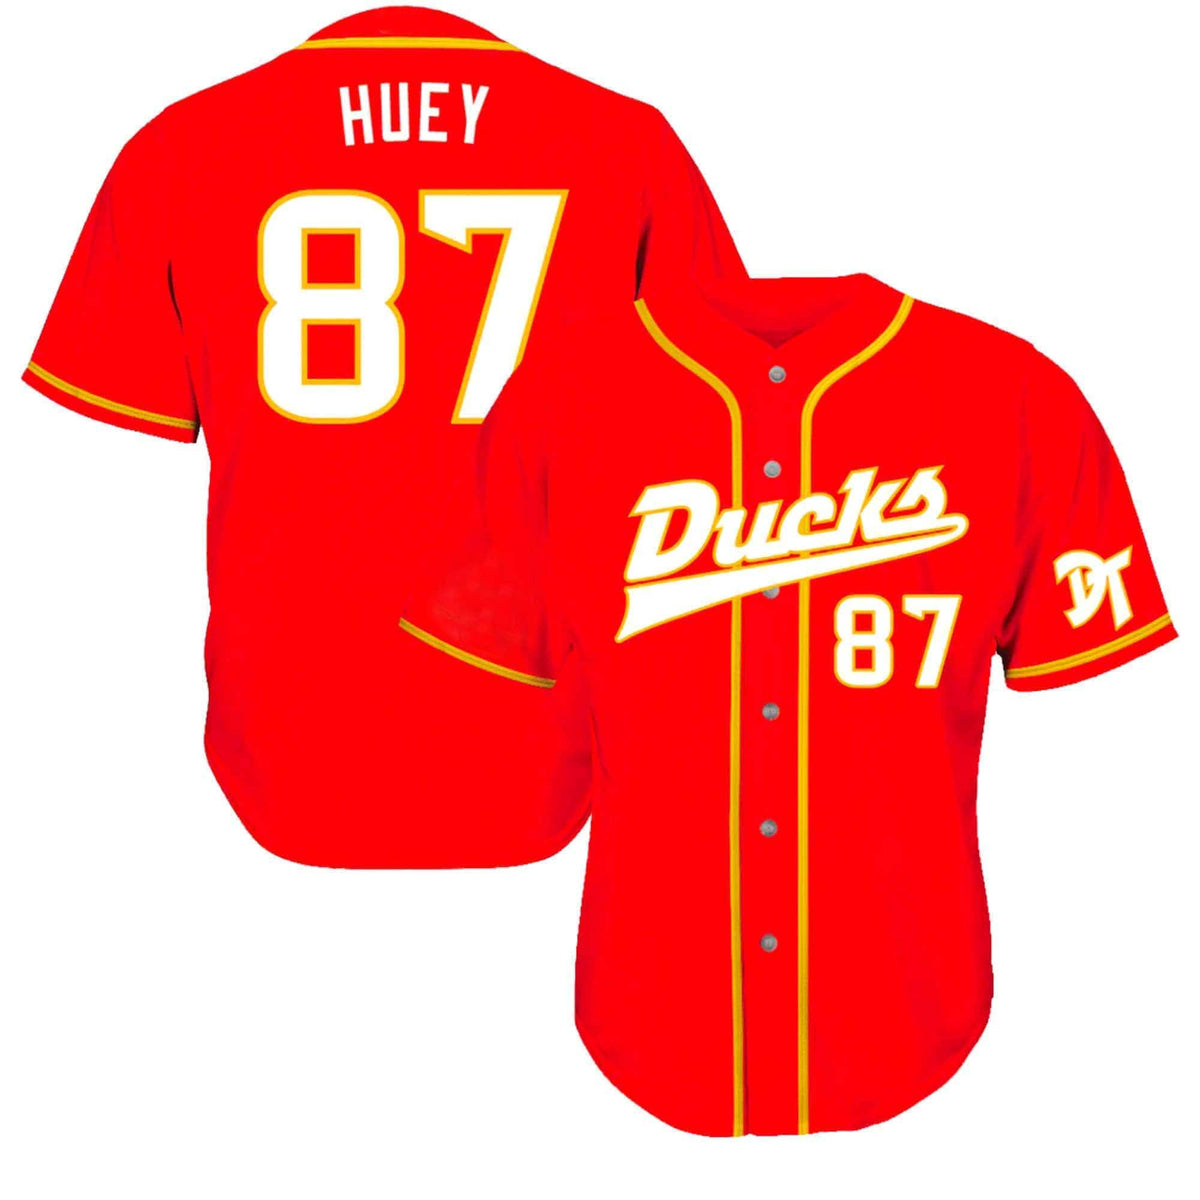 Ducks Baseball Jersey Huey